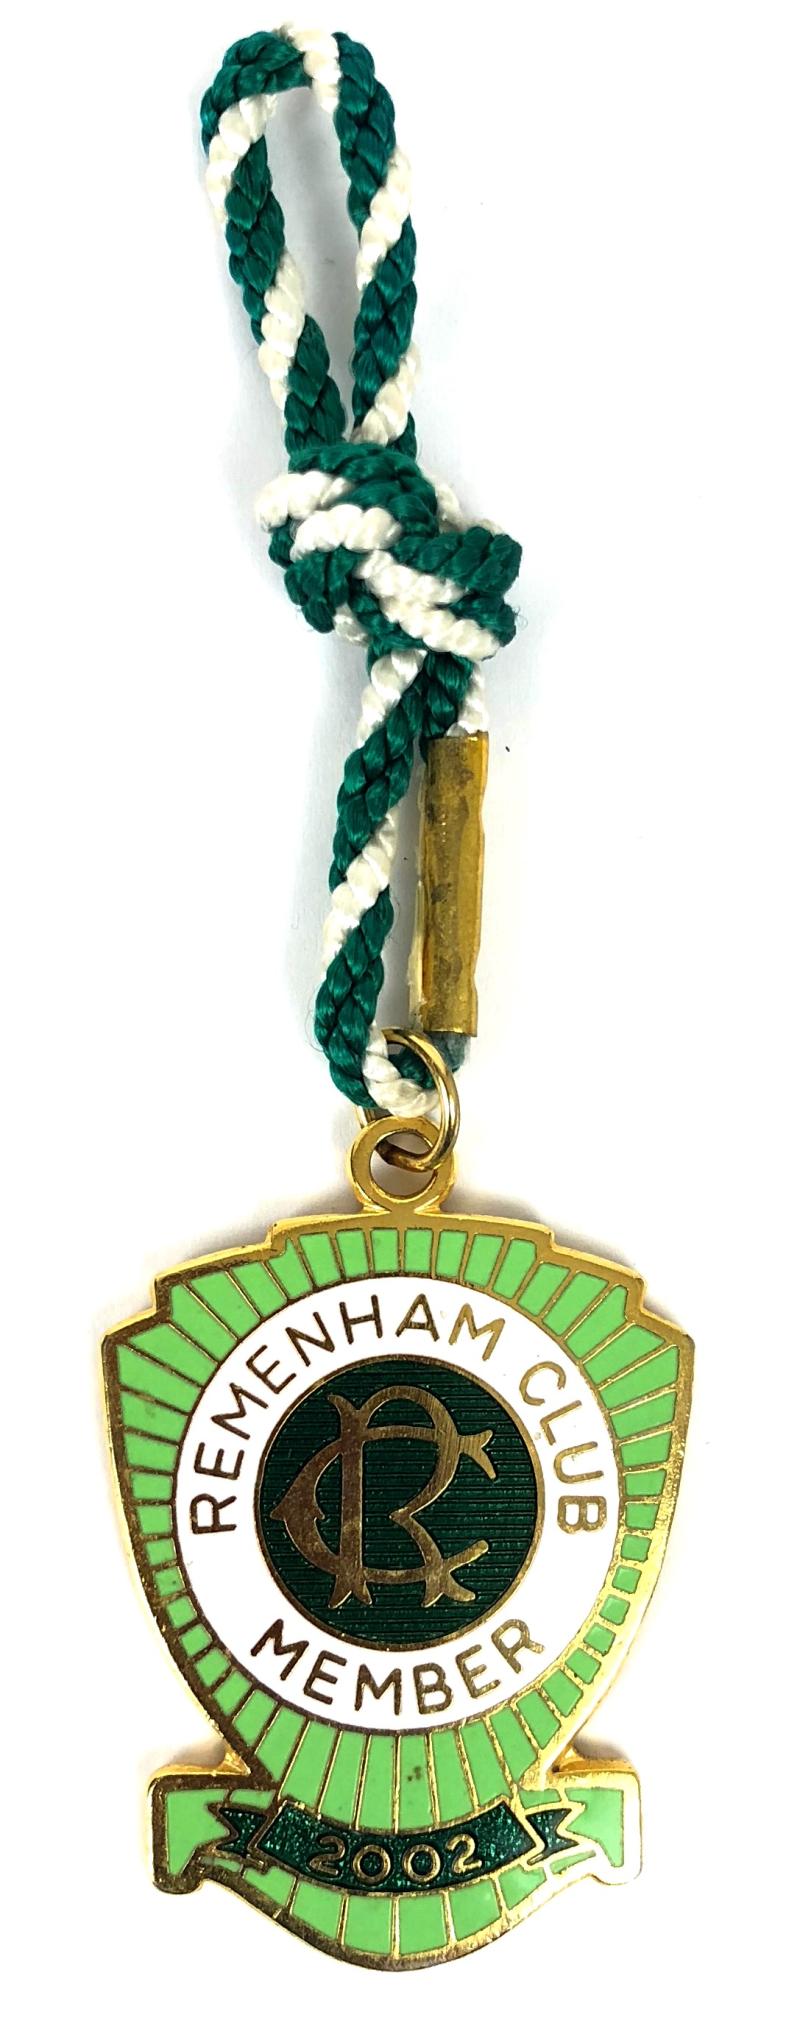 2002 Remenham Rowing Club badge Henley Royal Regatta